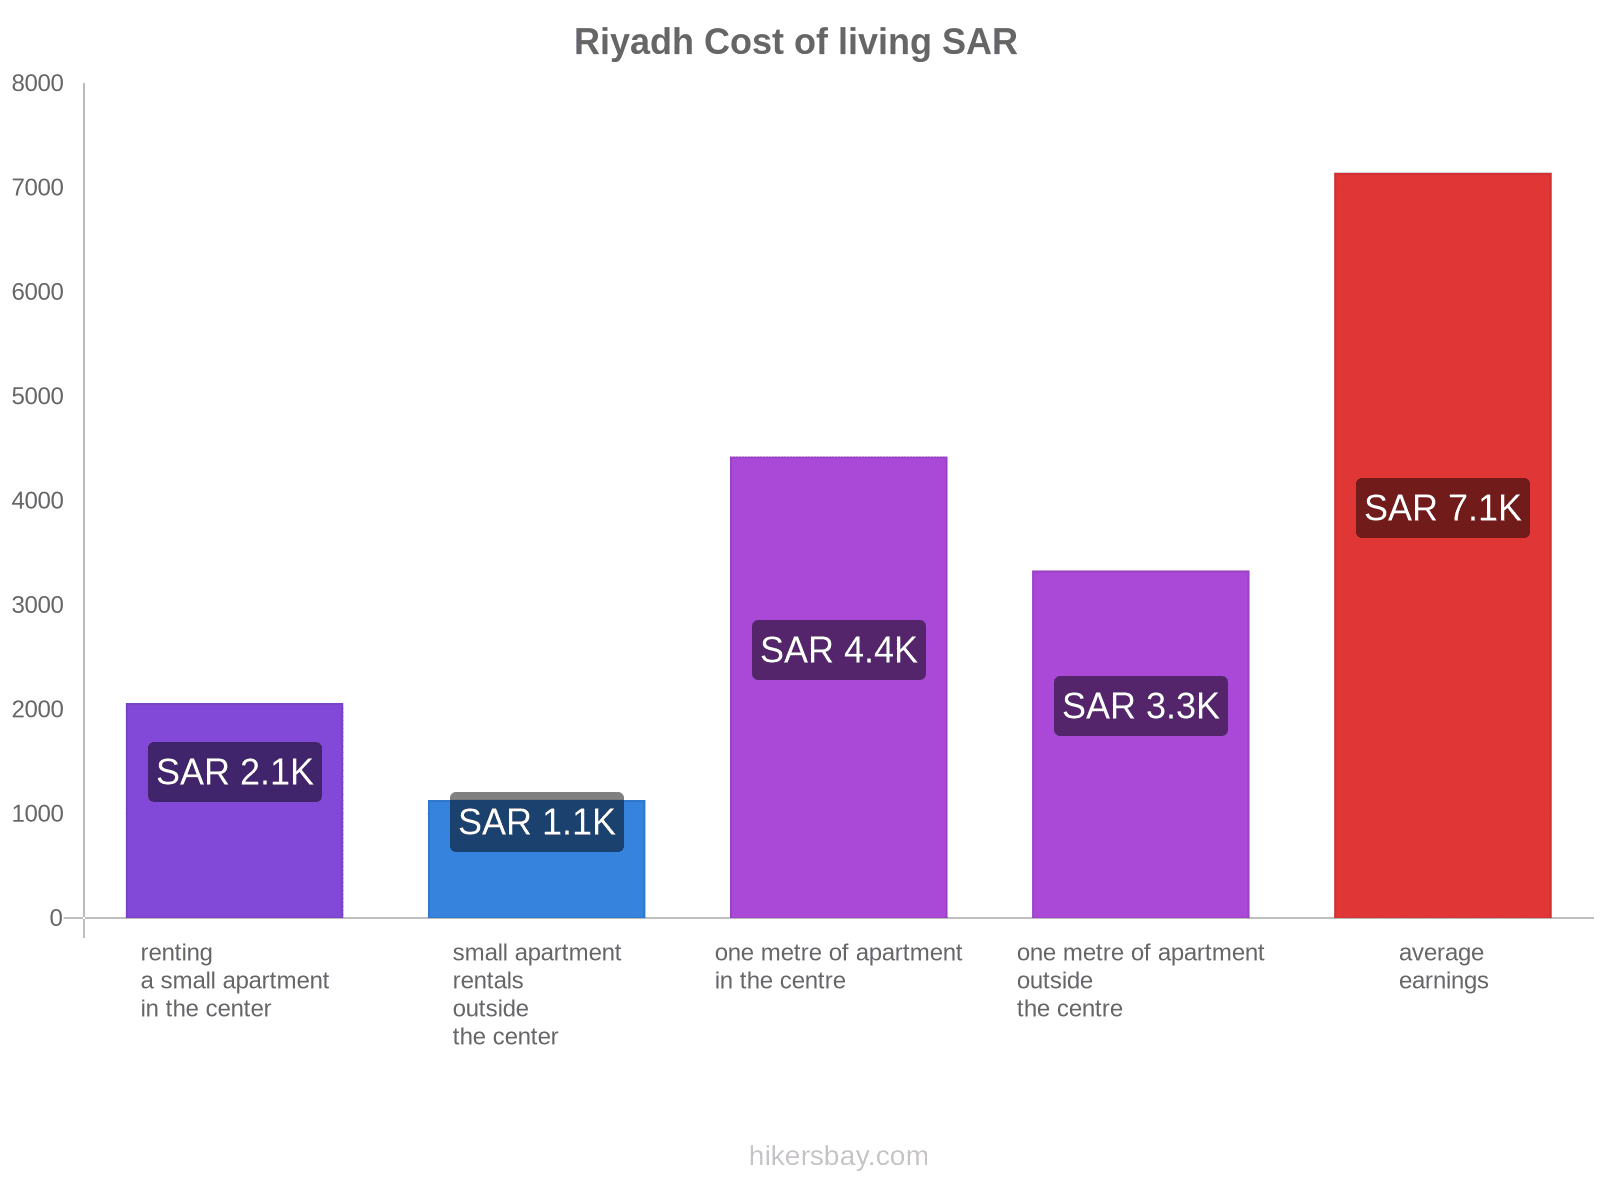 Riyadh cost of living hikersbay.com